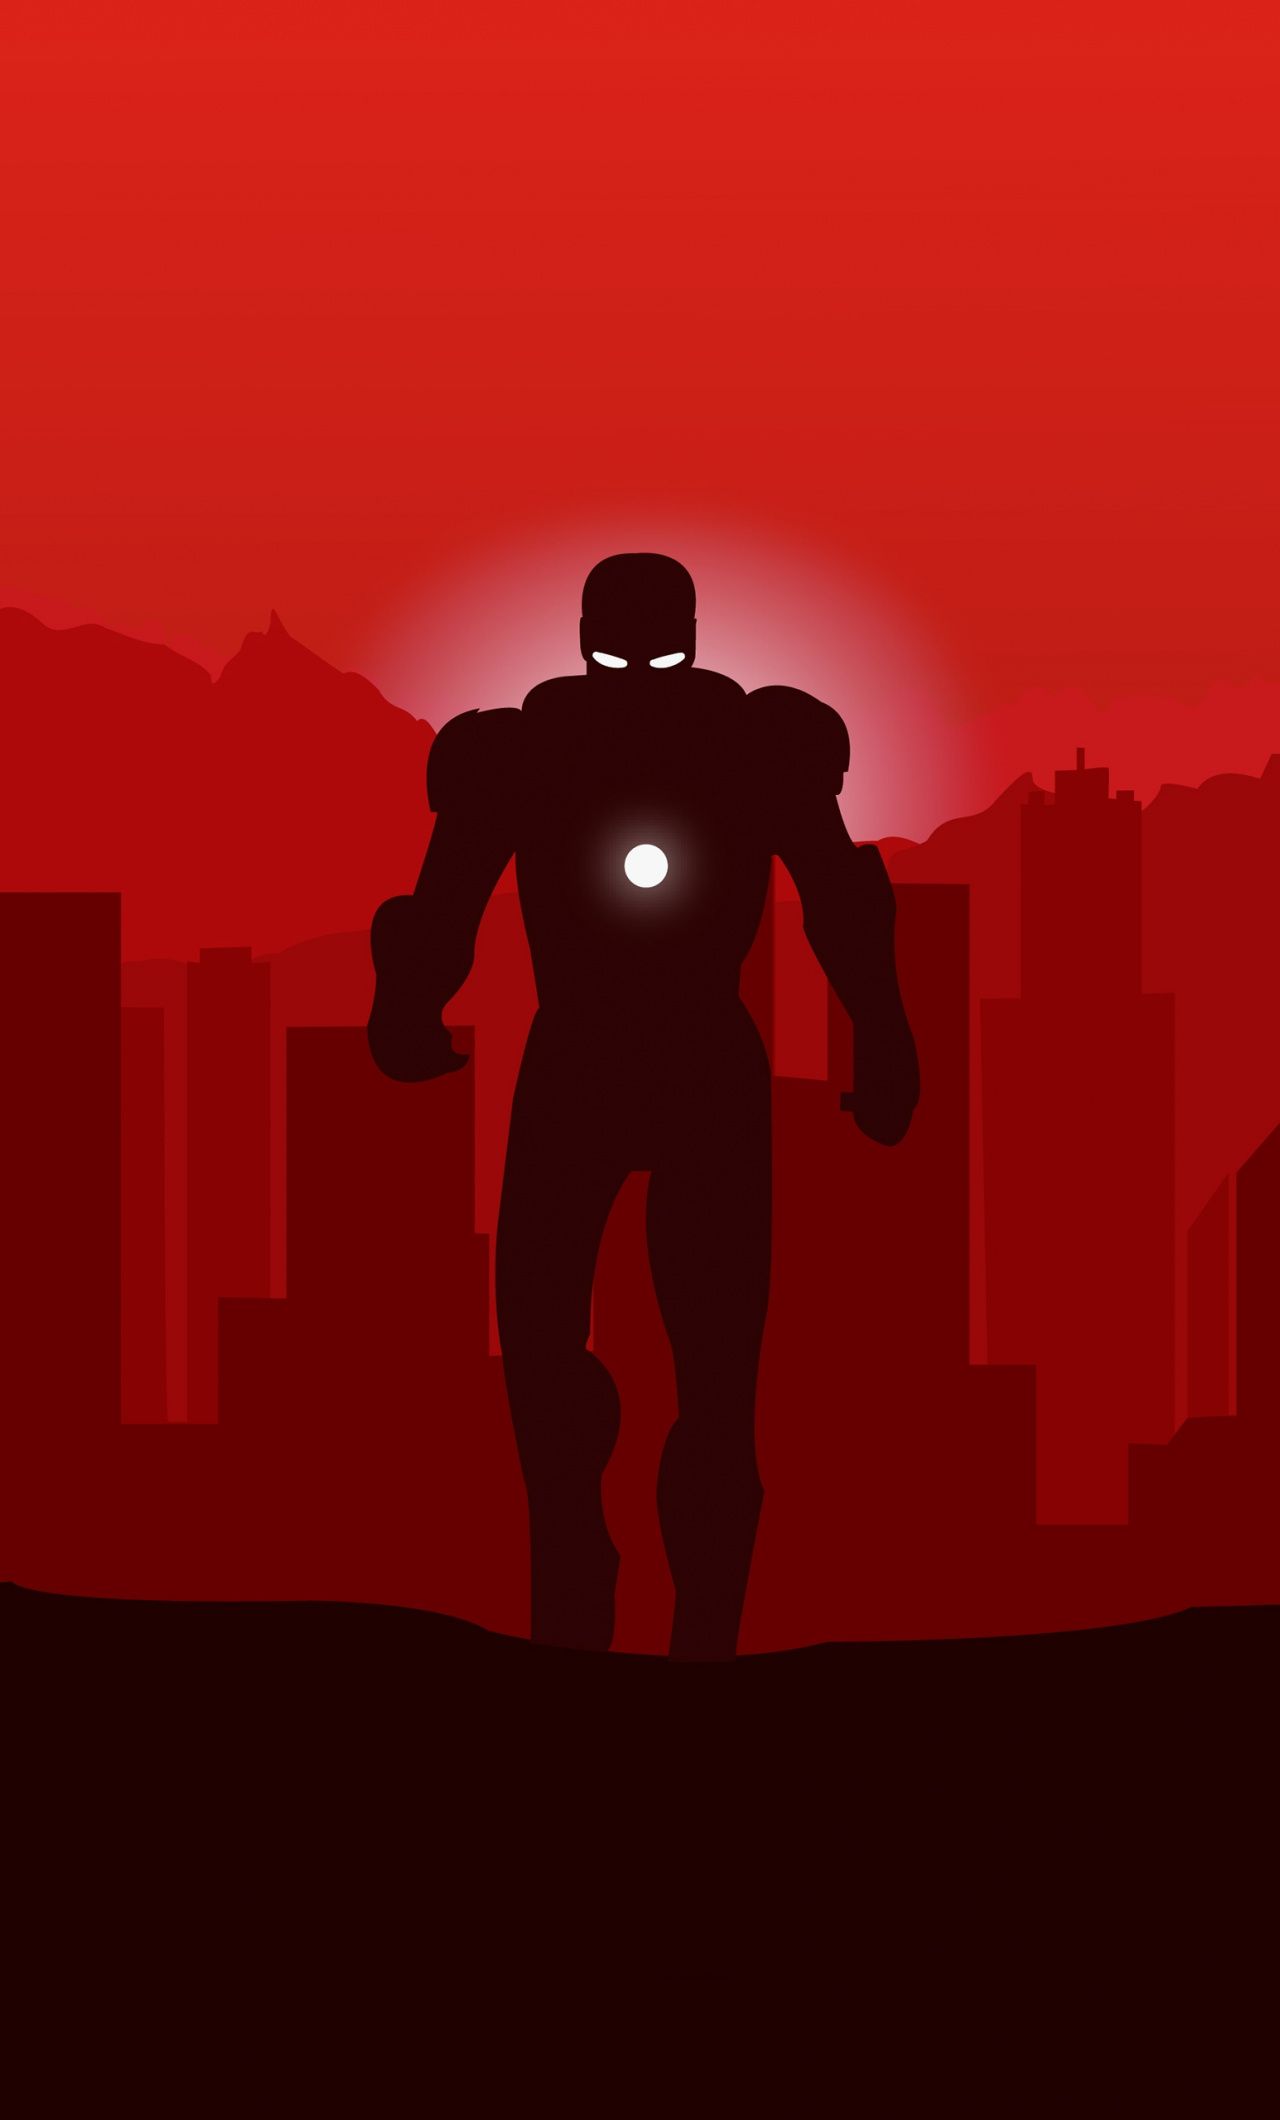 Download Marvel Heroes, Iron man, superhero, minimalist wallpaper, 1280x iPhone 6 Plus